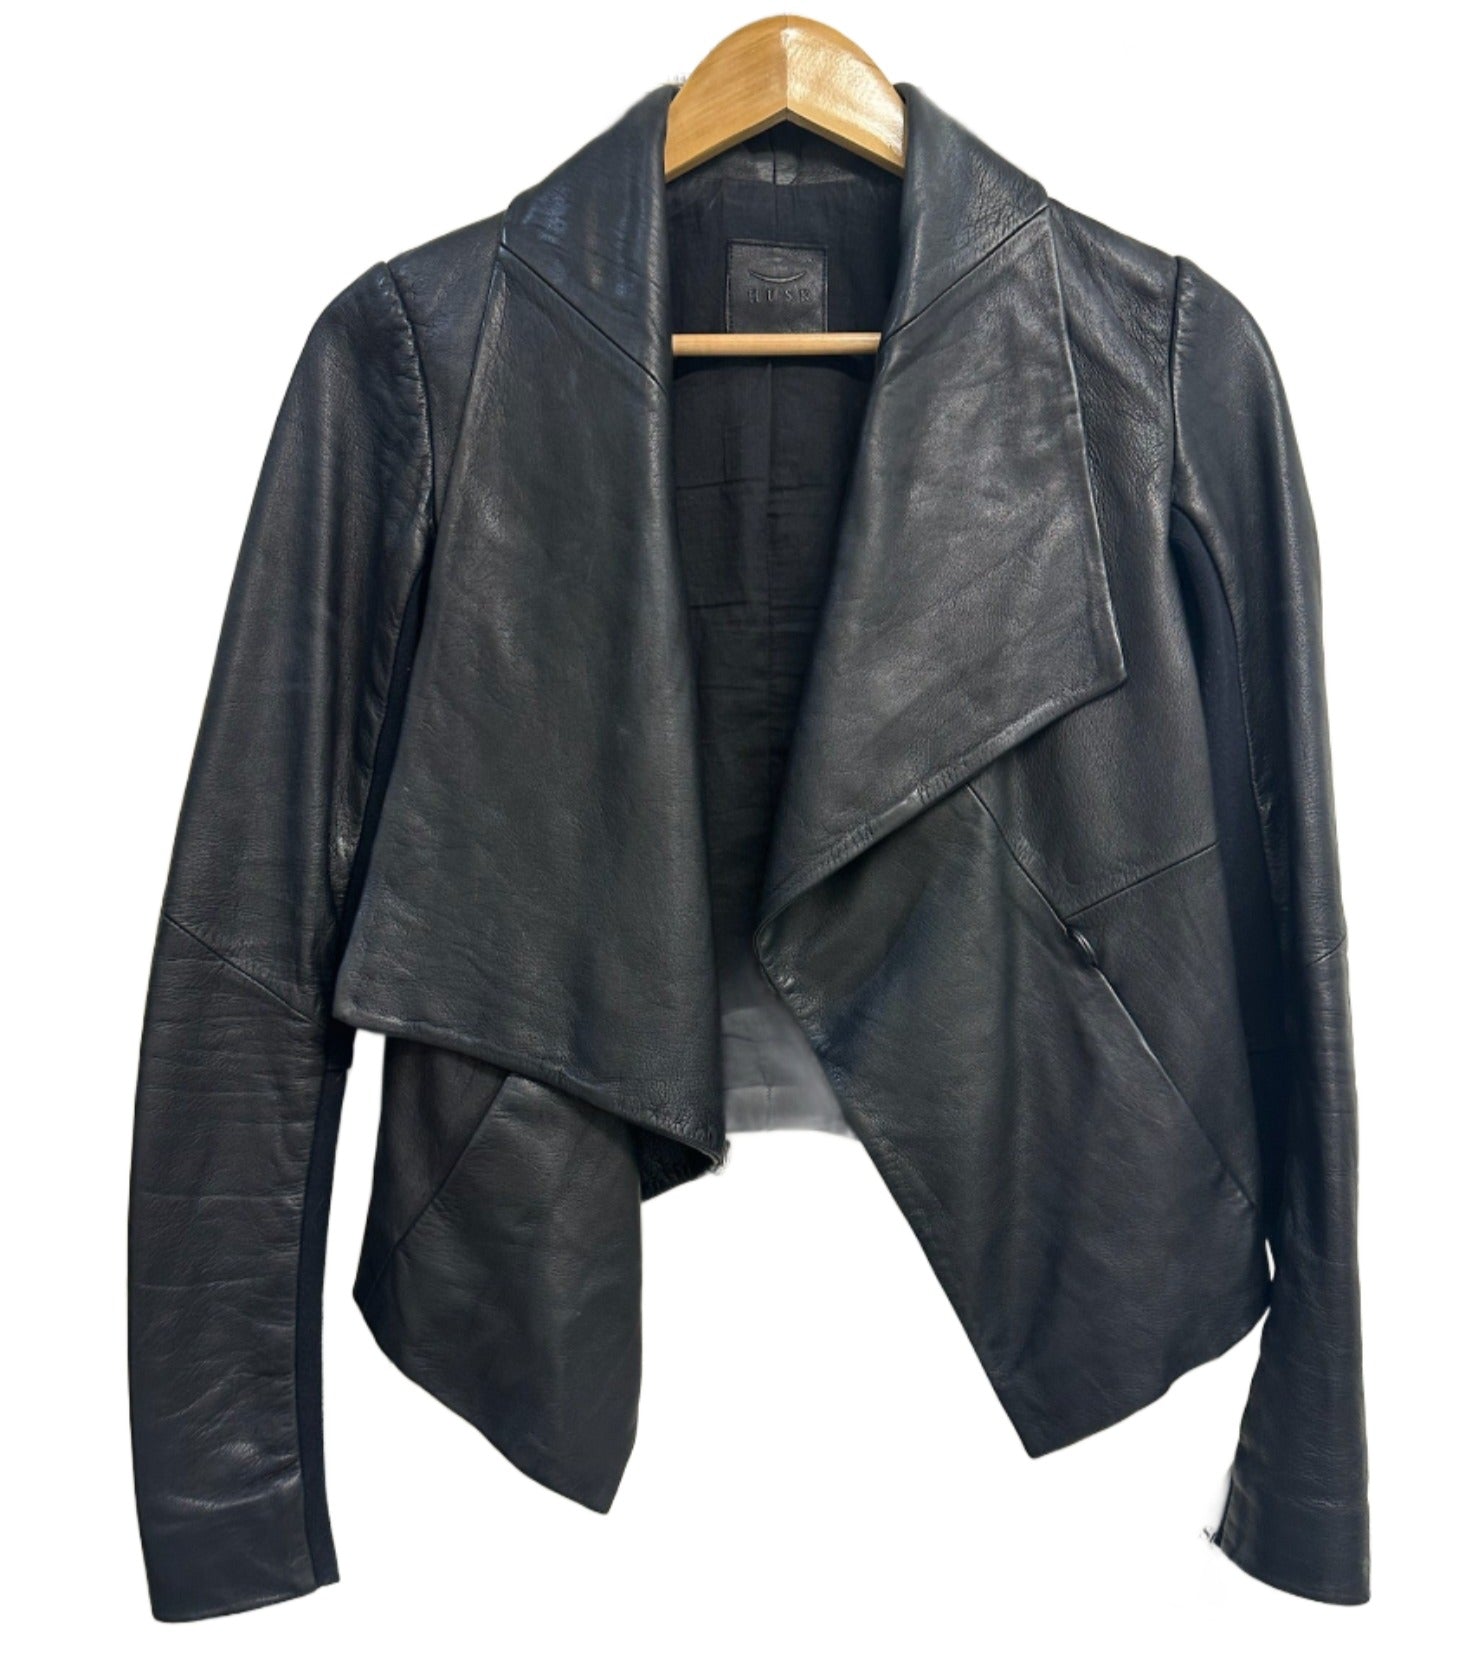 Husk Black Leather Jacket